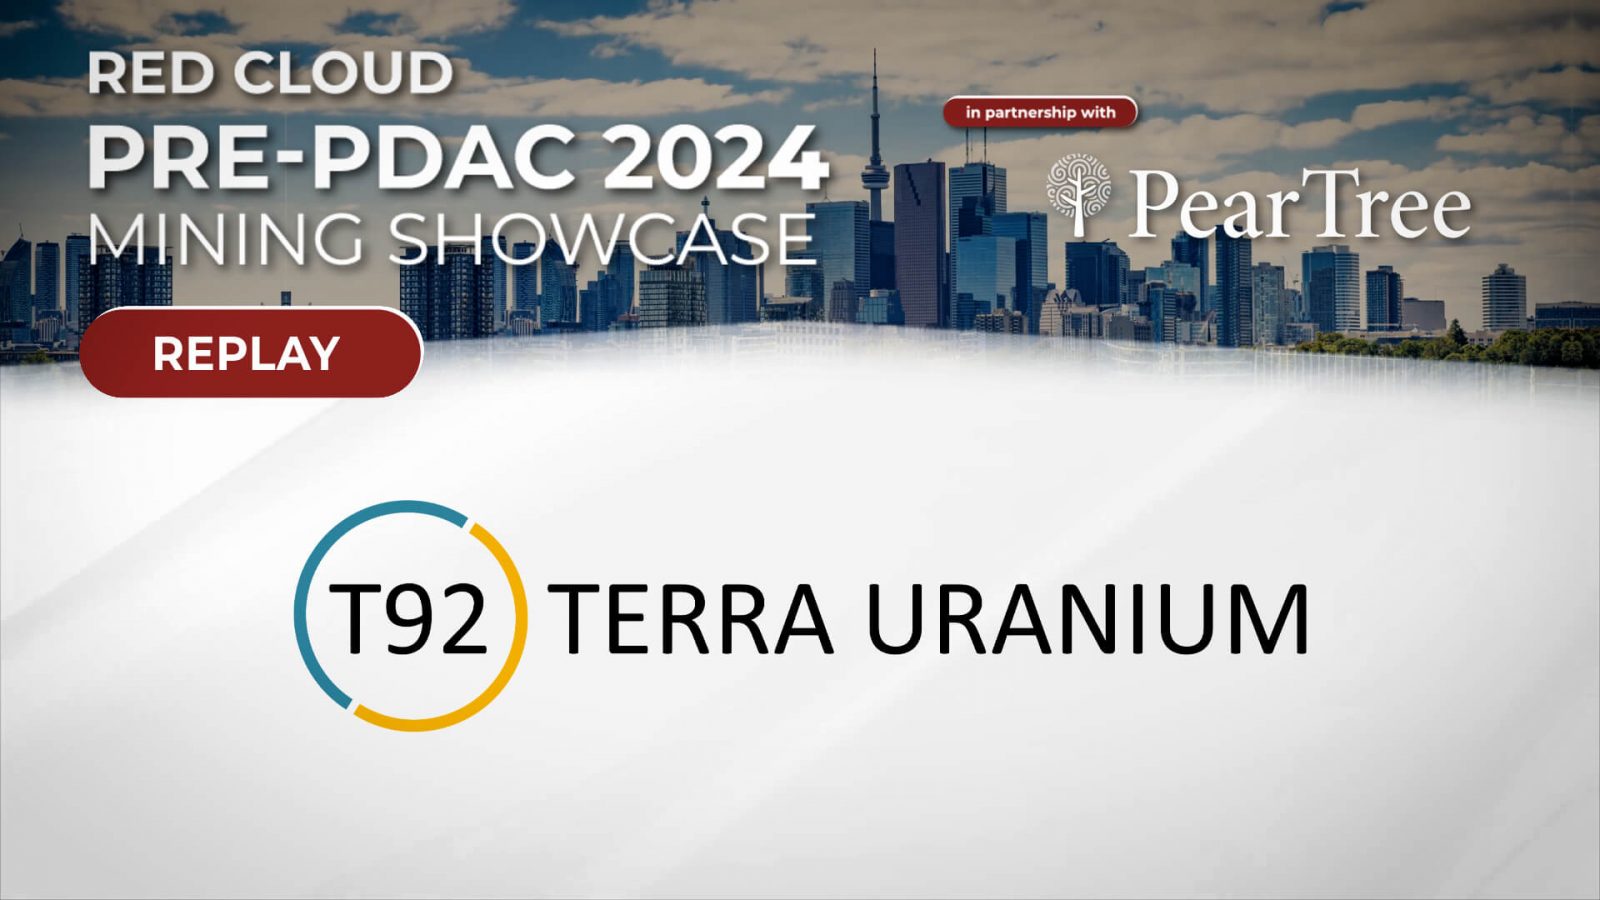 Terra uranium _ Replay (1)